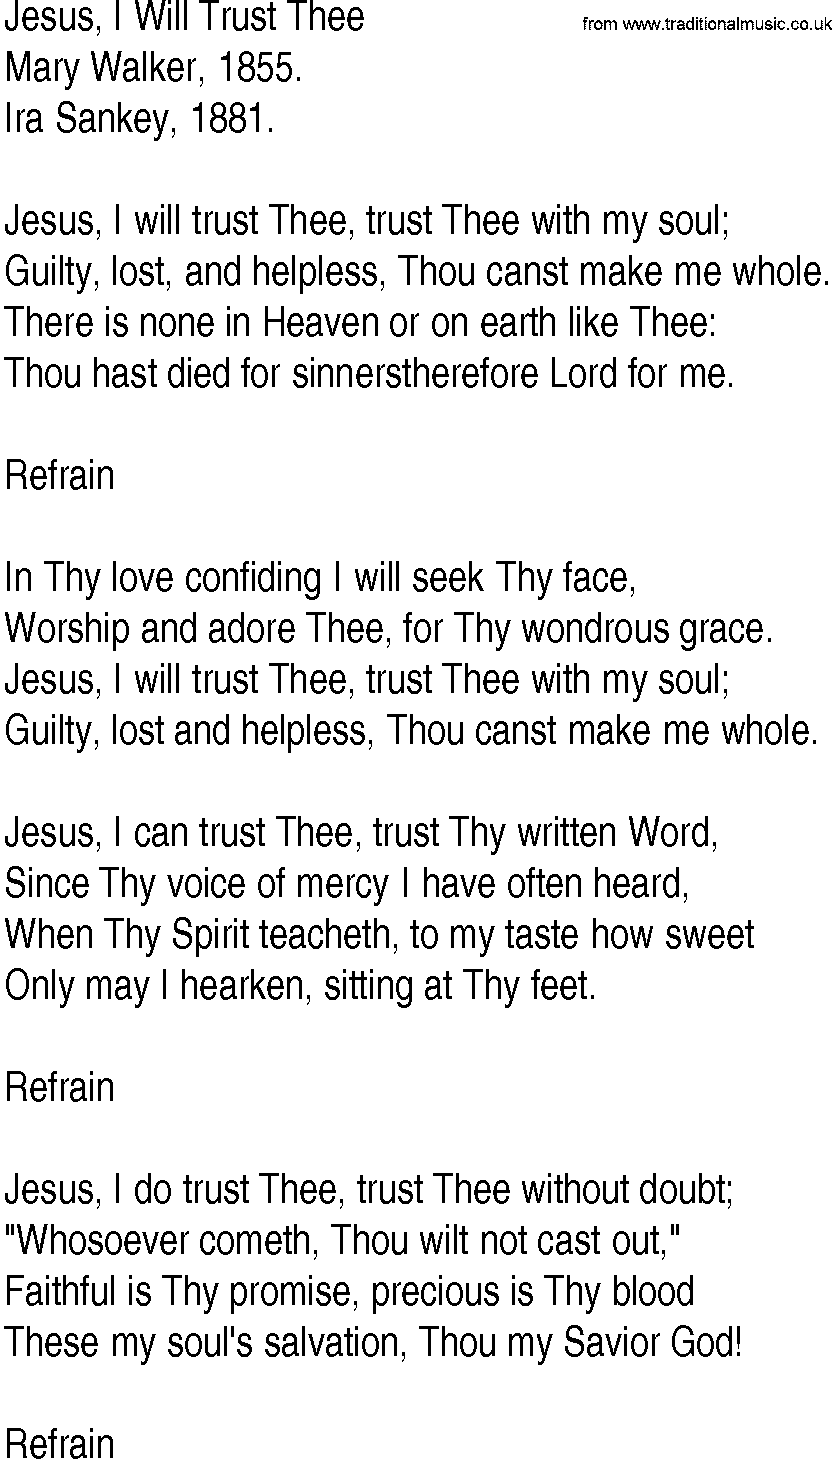 Hymn and Gospel Song: Jesus, I Will Trust Thee by Mary Walker lyrics